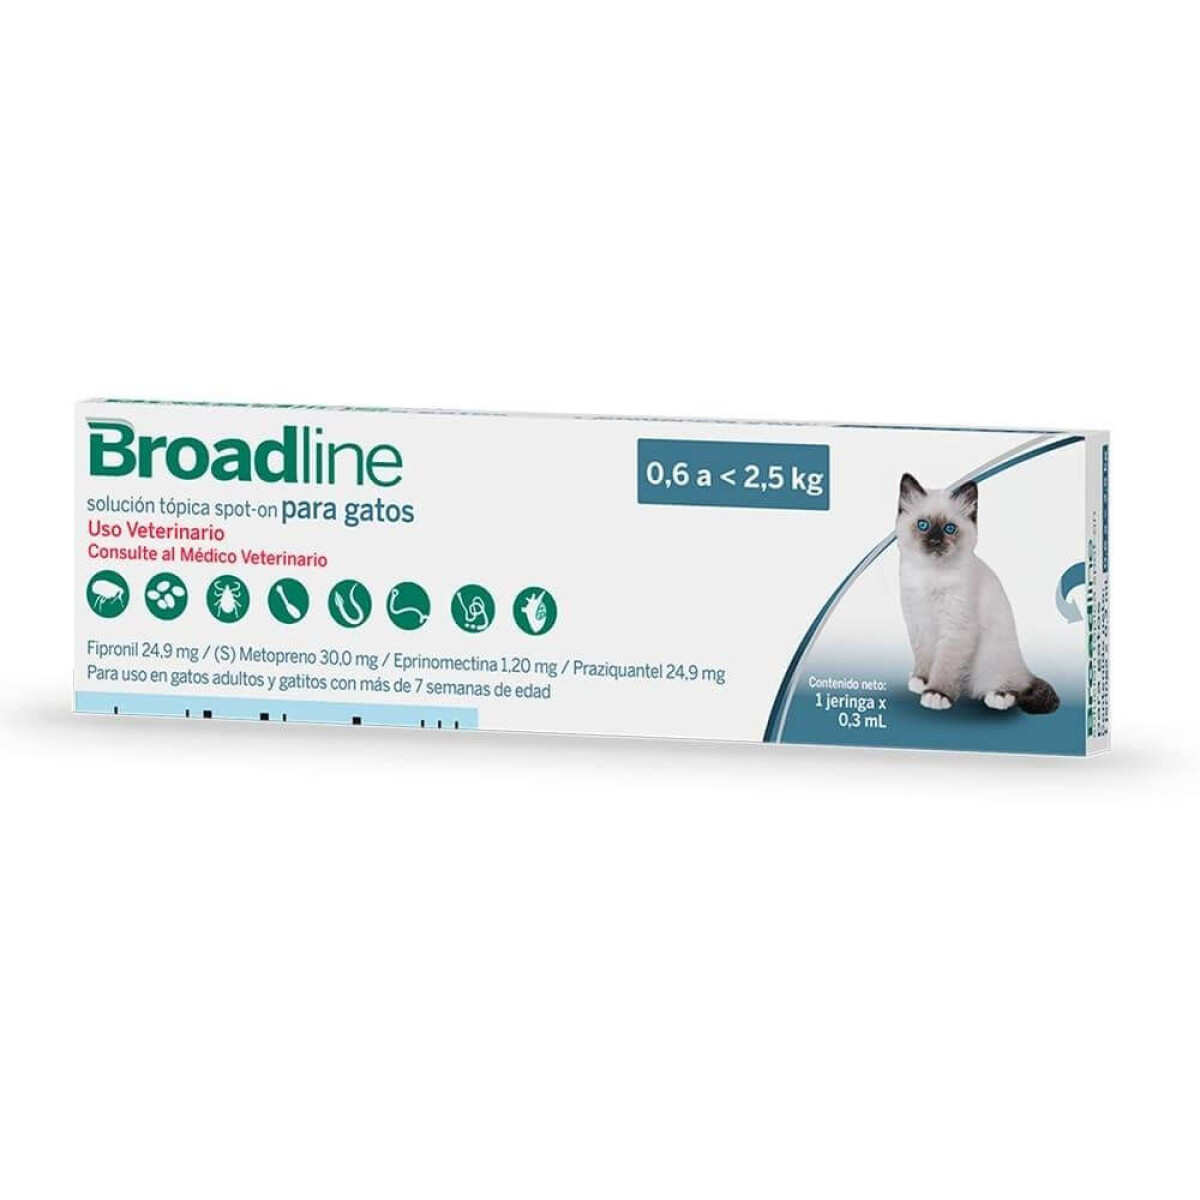 BROADLINE 0.6 A 2.5 KG - Unica 